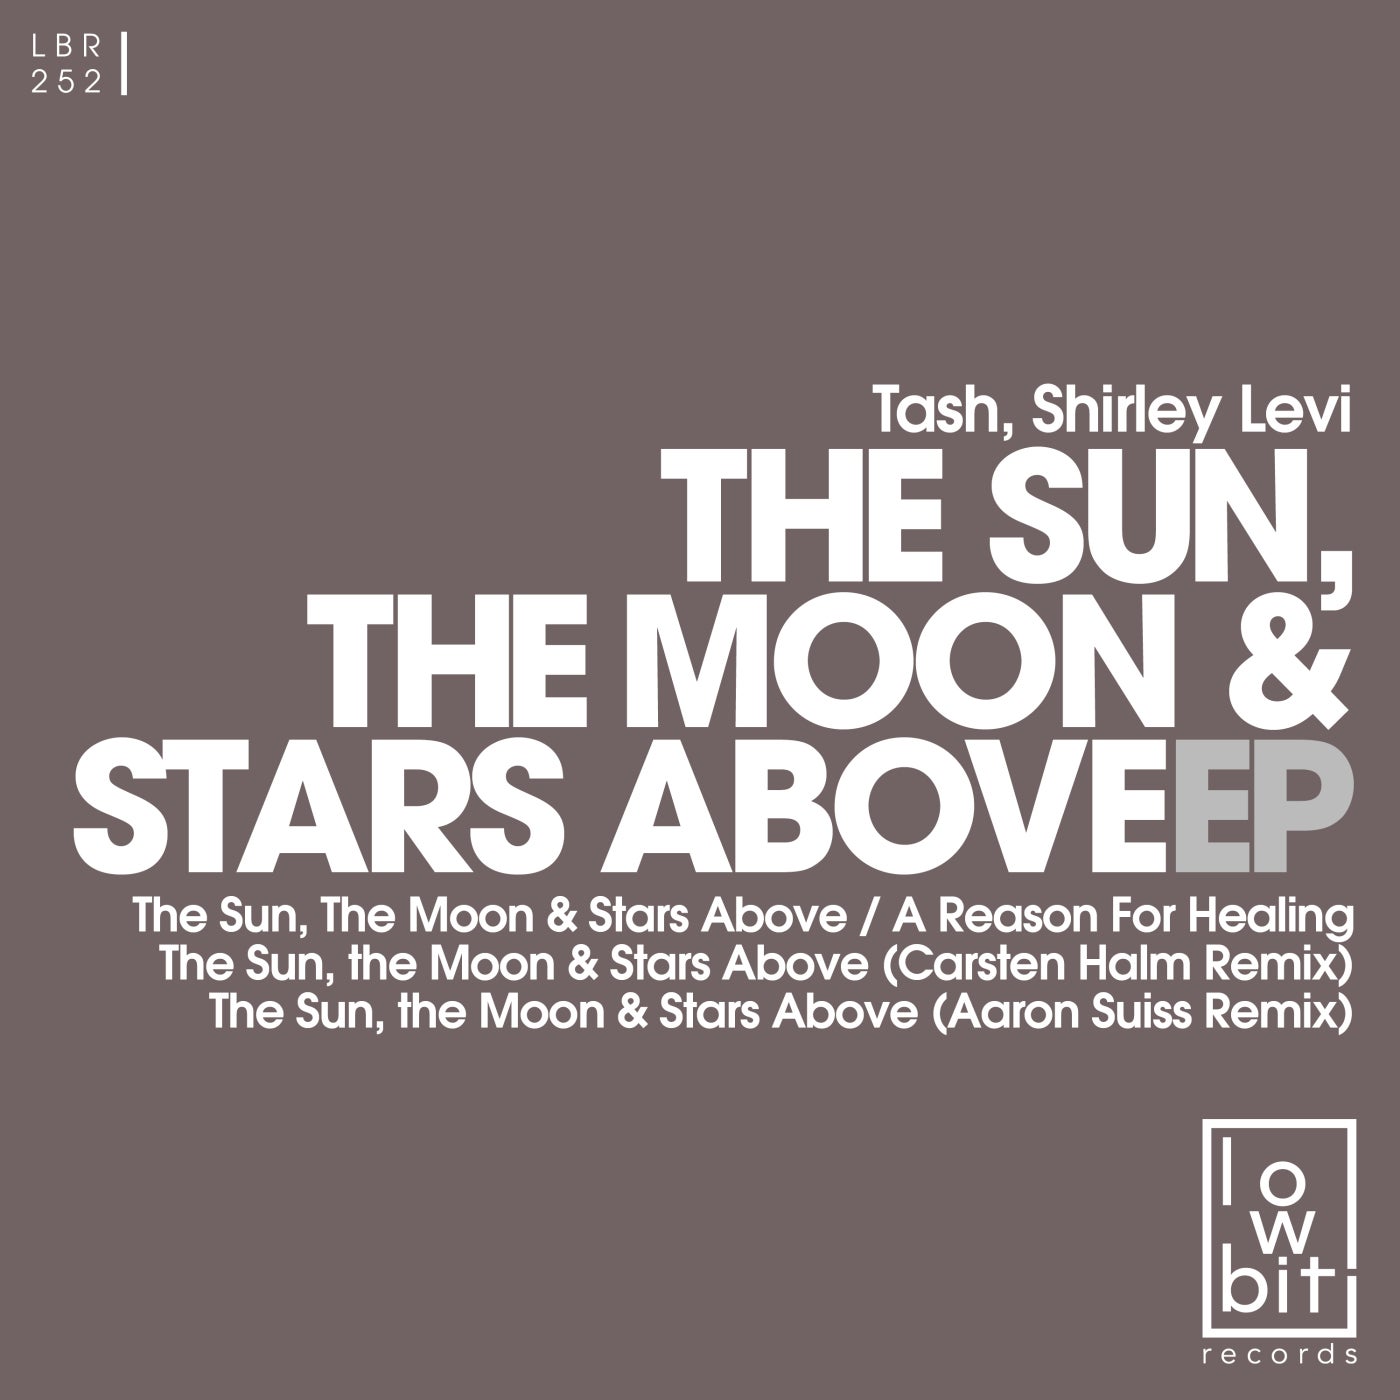 Tash, Shirley Levi – The Sun, the Moon & Stars Above [LBR252]